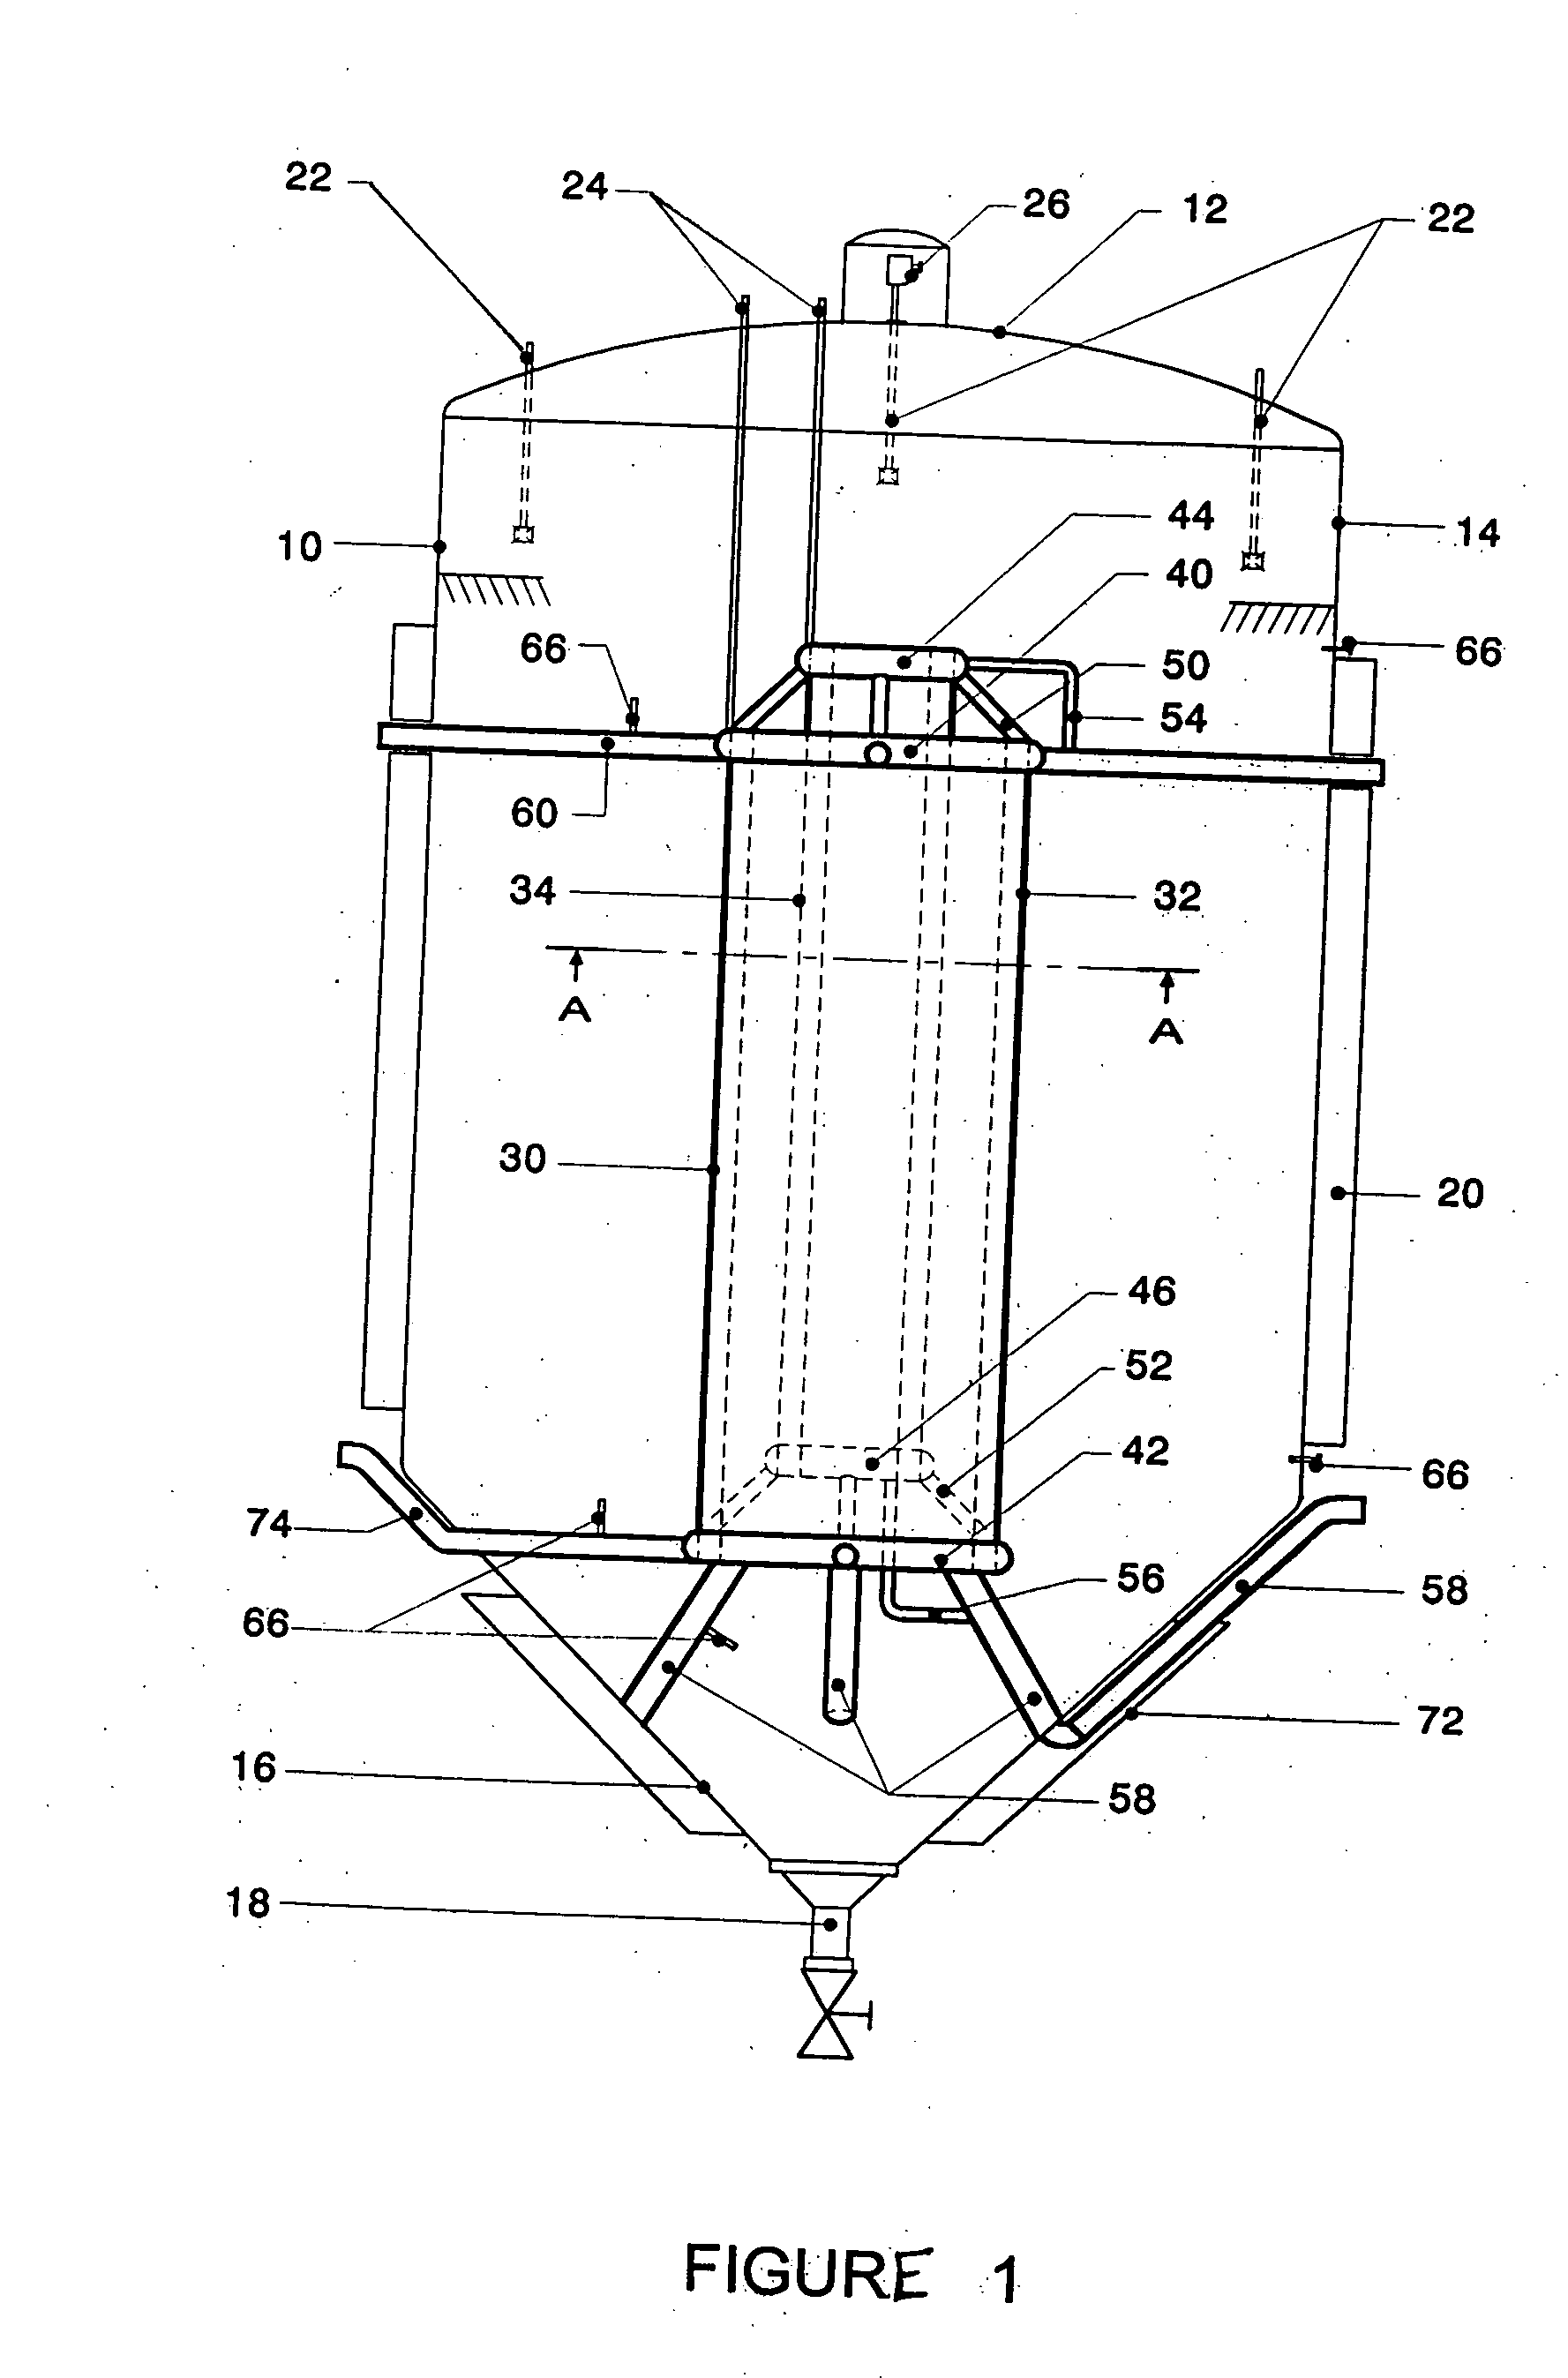 Heat exchanger for fermentation tank